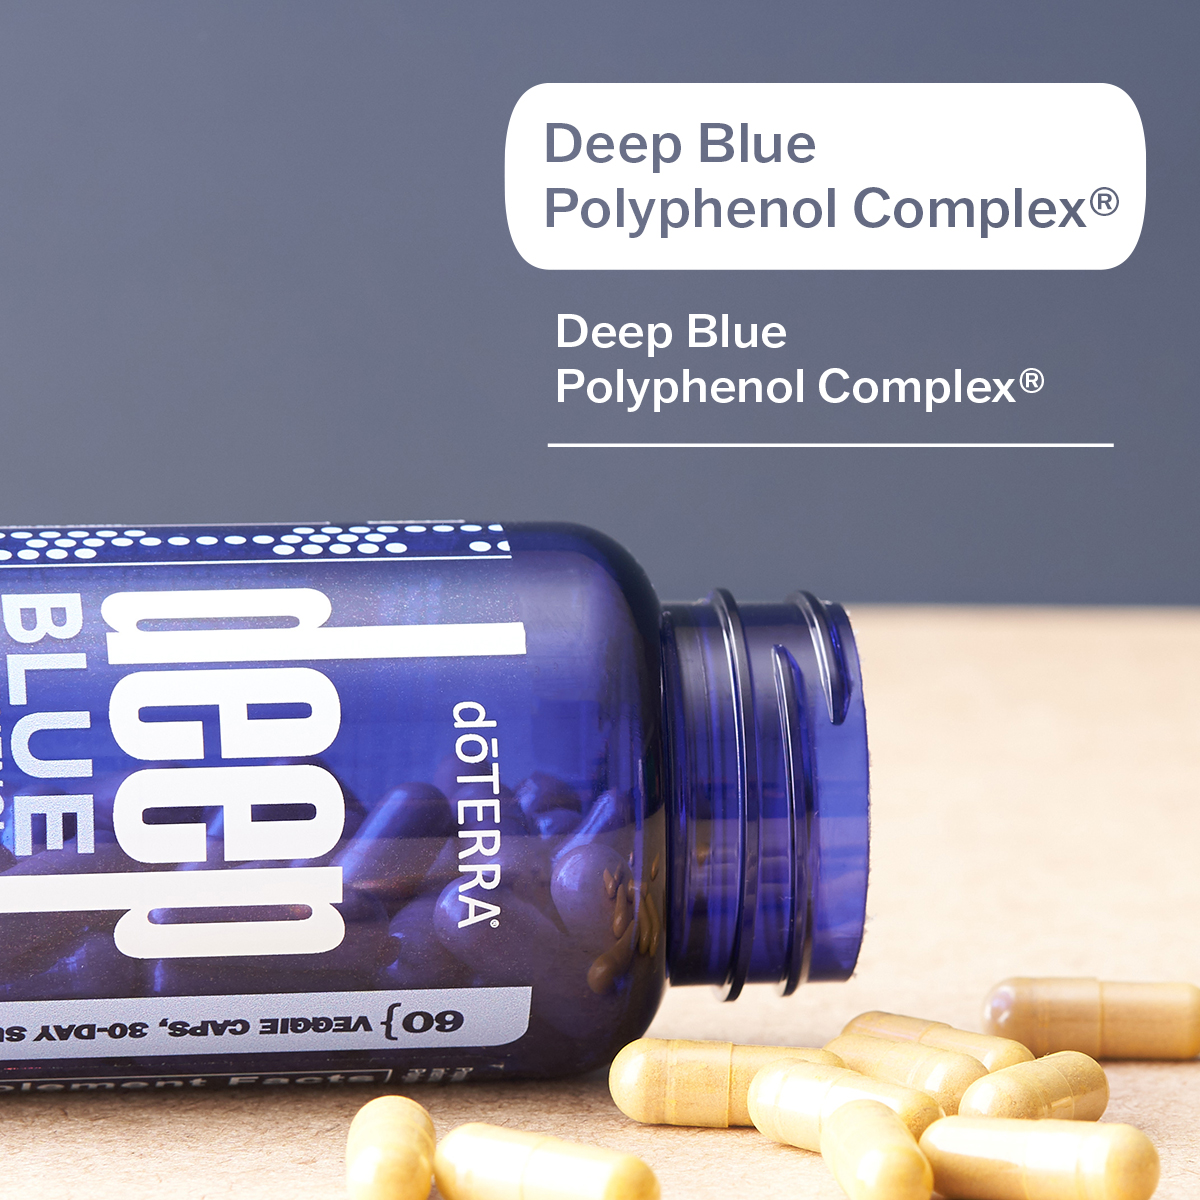 Deep Blue Polyphenol Complex YouTube.jpg